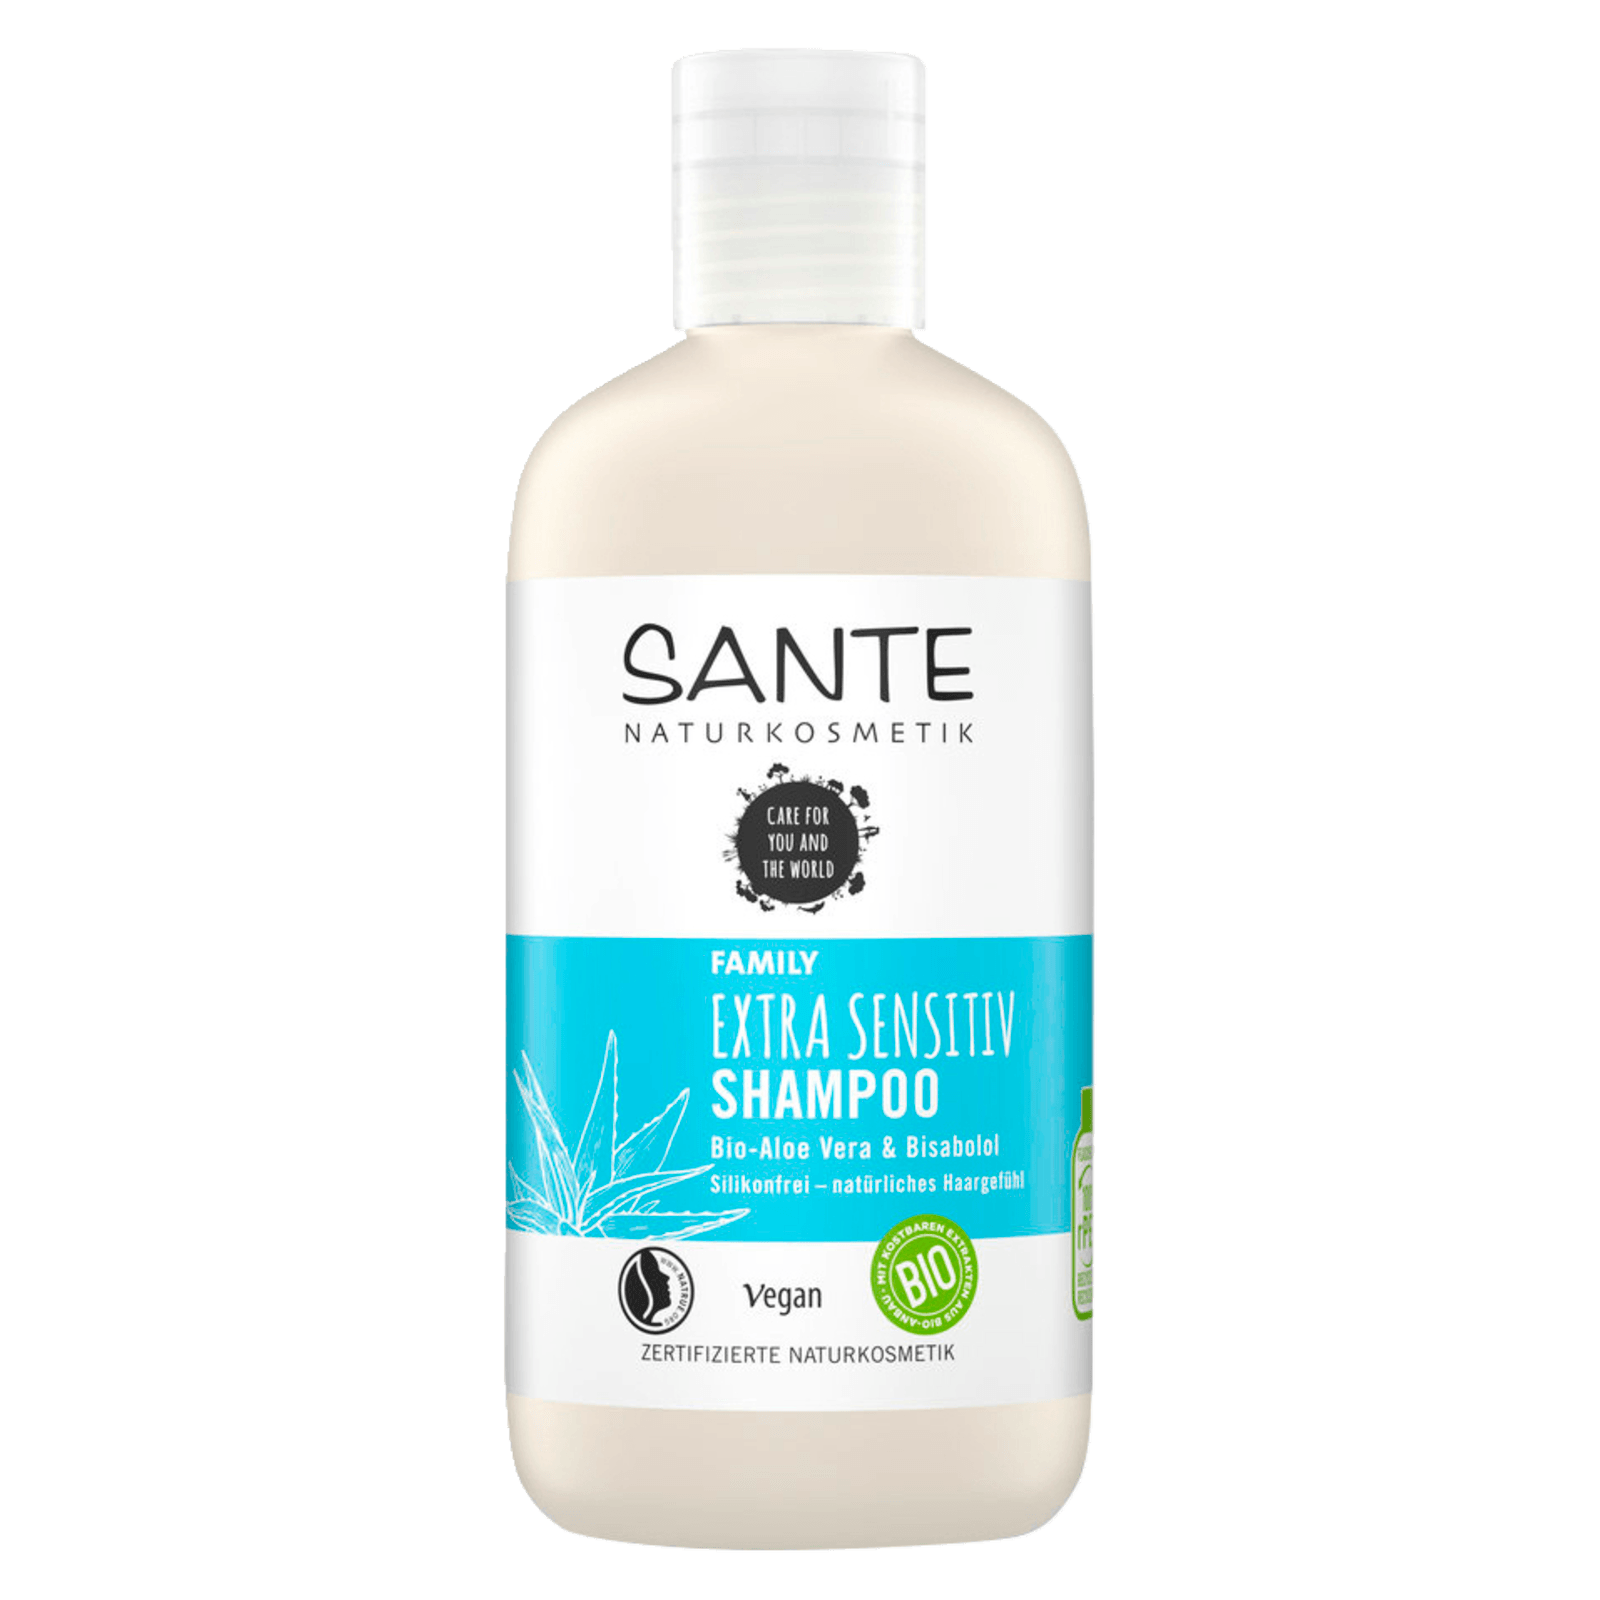 Sante Naturkosmetik Family Extra Sensitiv Shampoo 250ml bei REWE online  bestellen!